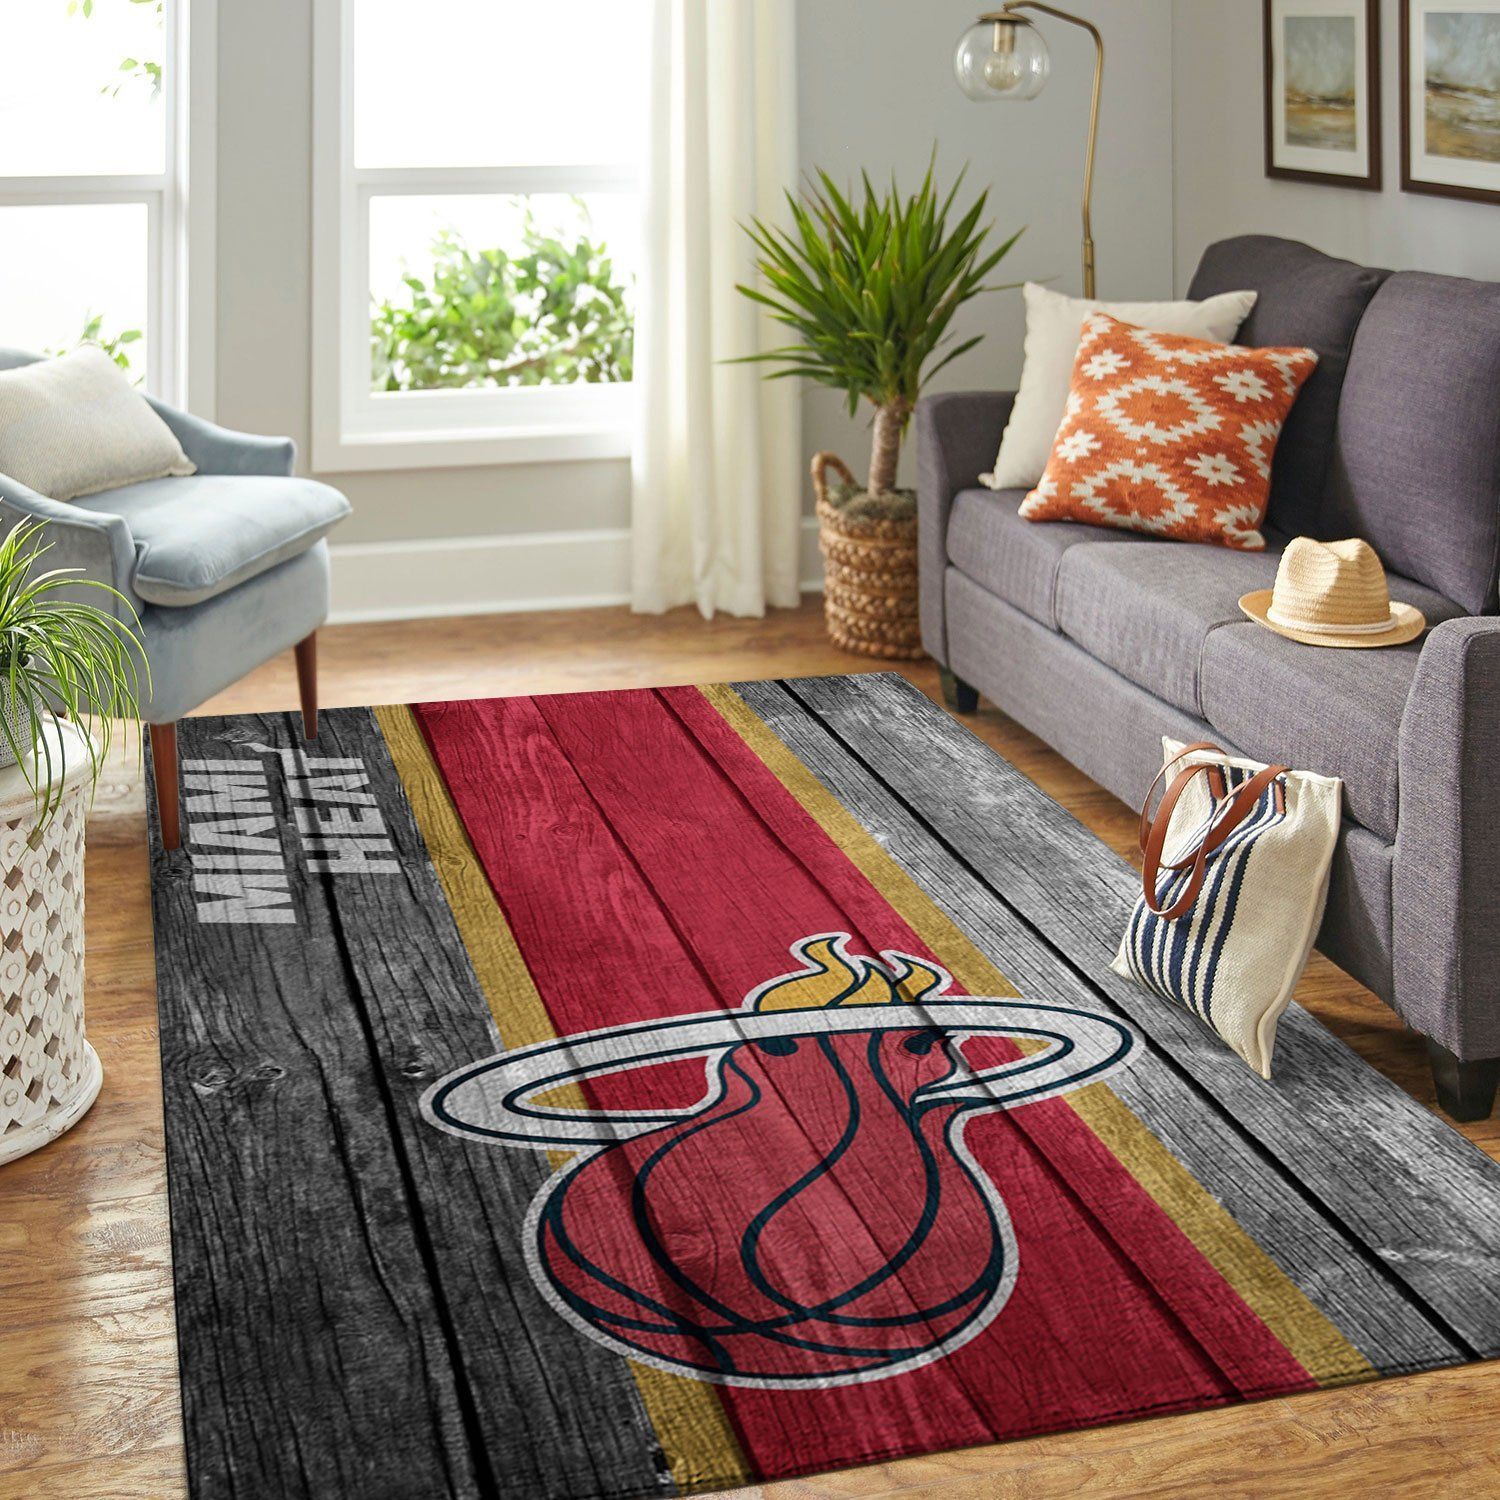 Miami Heat Nba Team Logo Wooden Style Nice Gift Home Decor Rectangle Area Rug - Indoor Outdoor Rugs